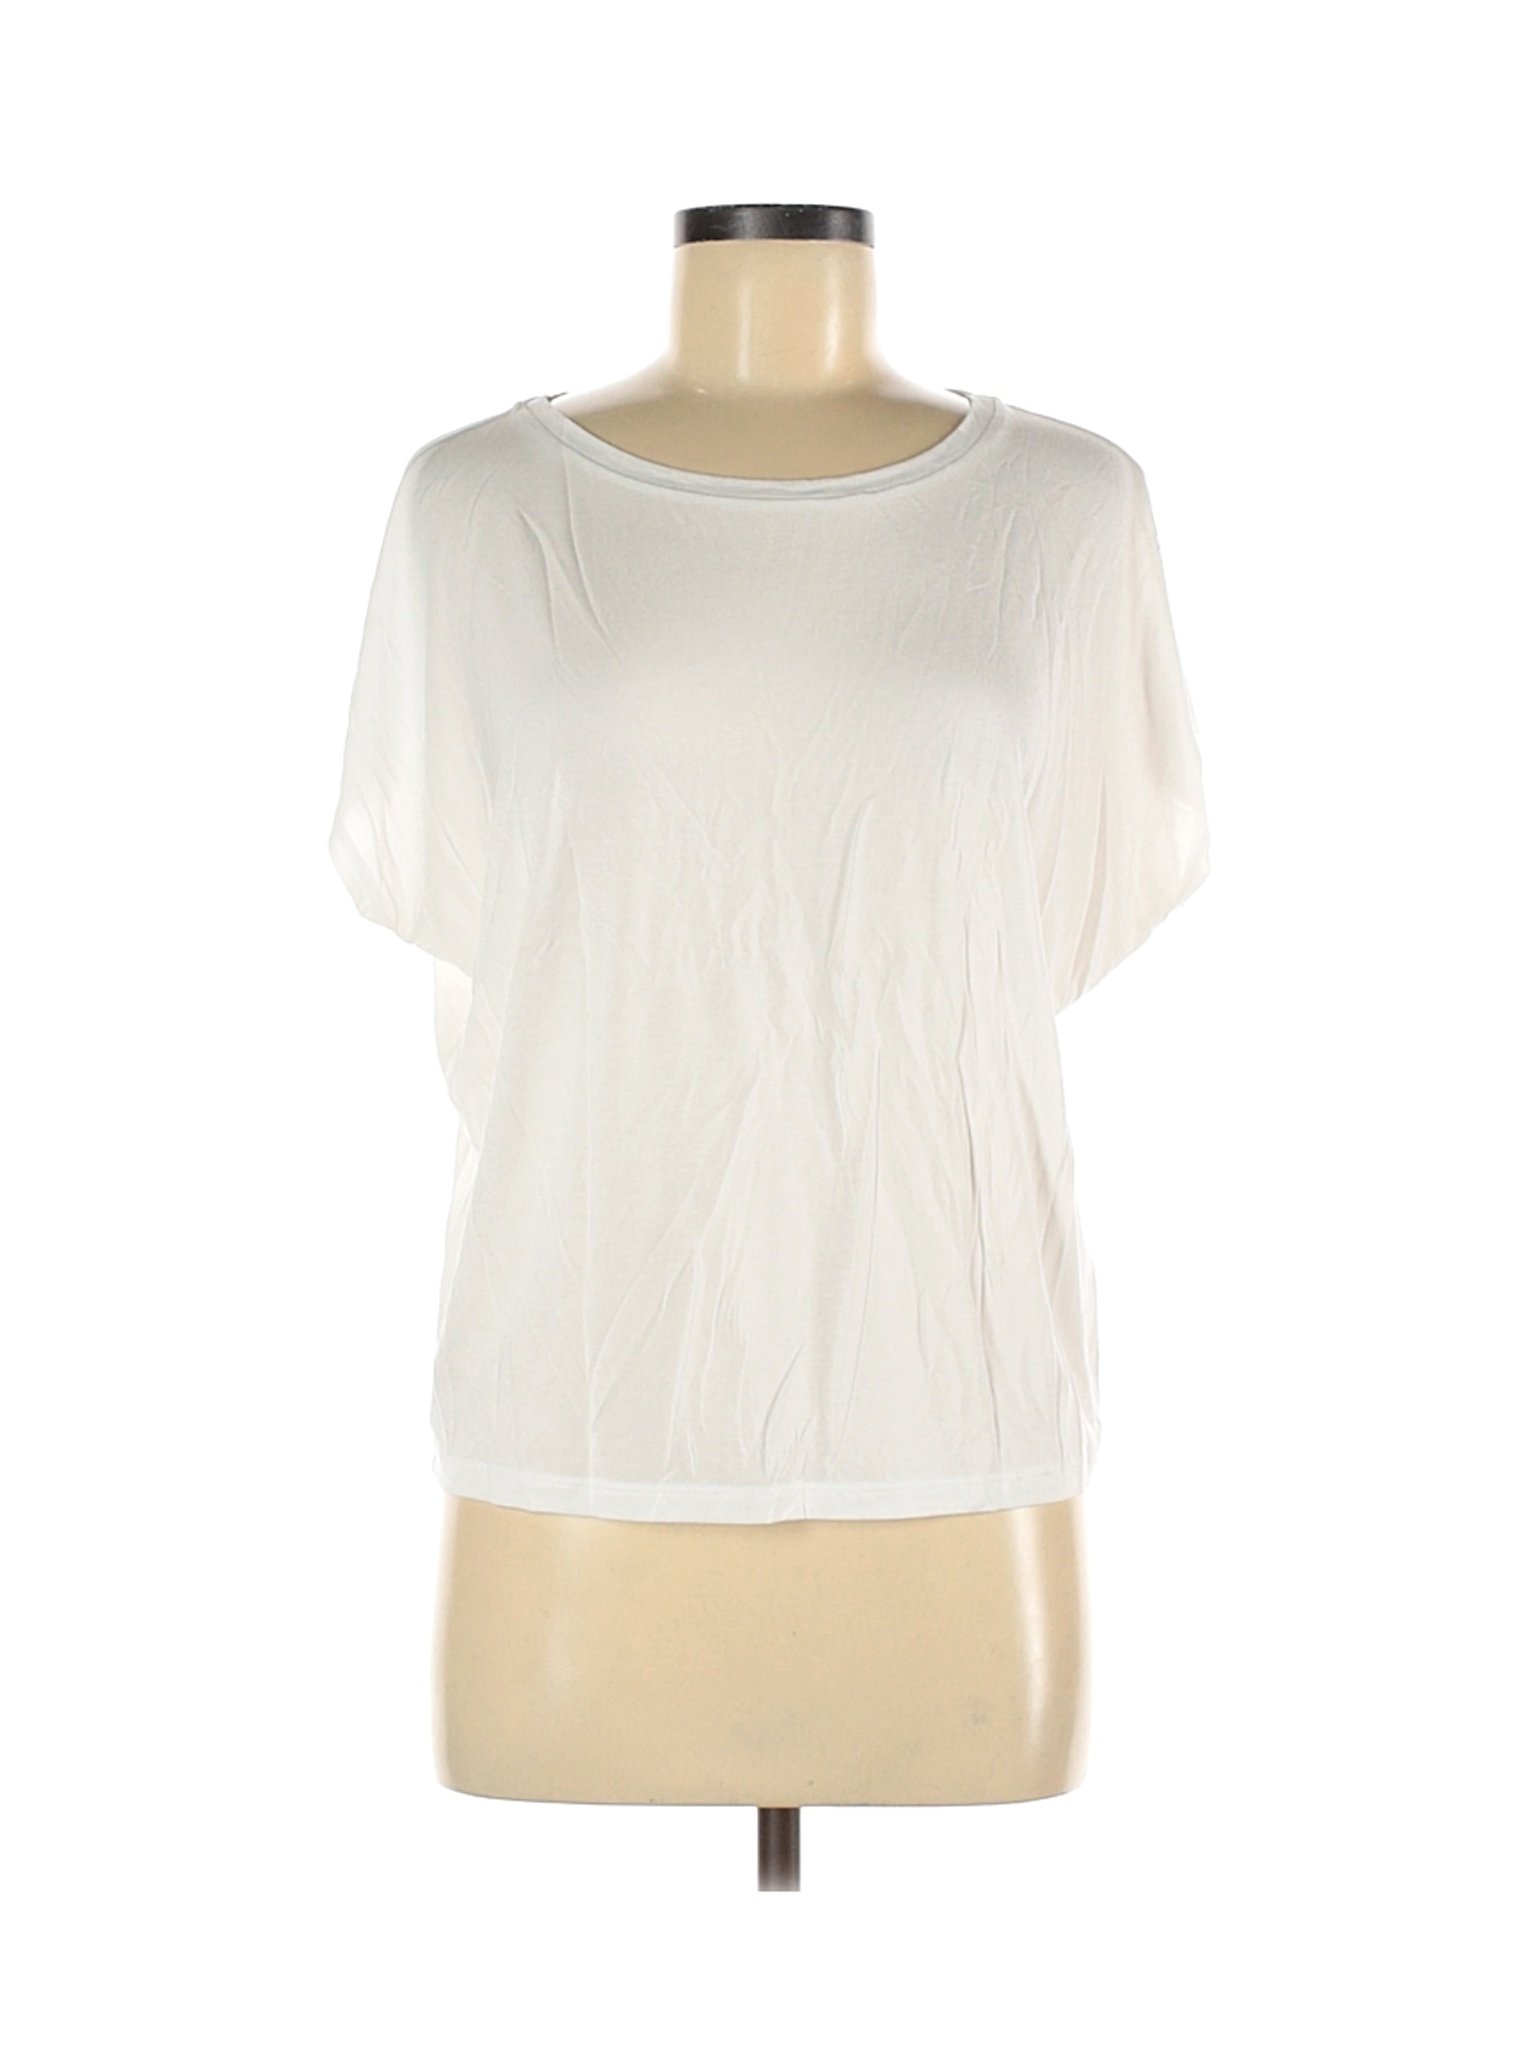 Uniqlo Women White Short Sleeve T-Shirt S | eBay